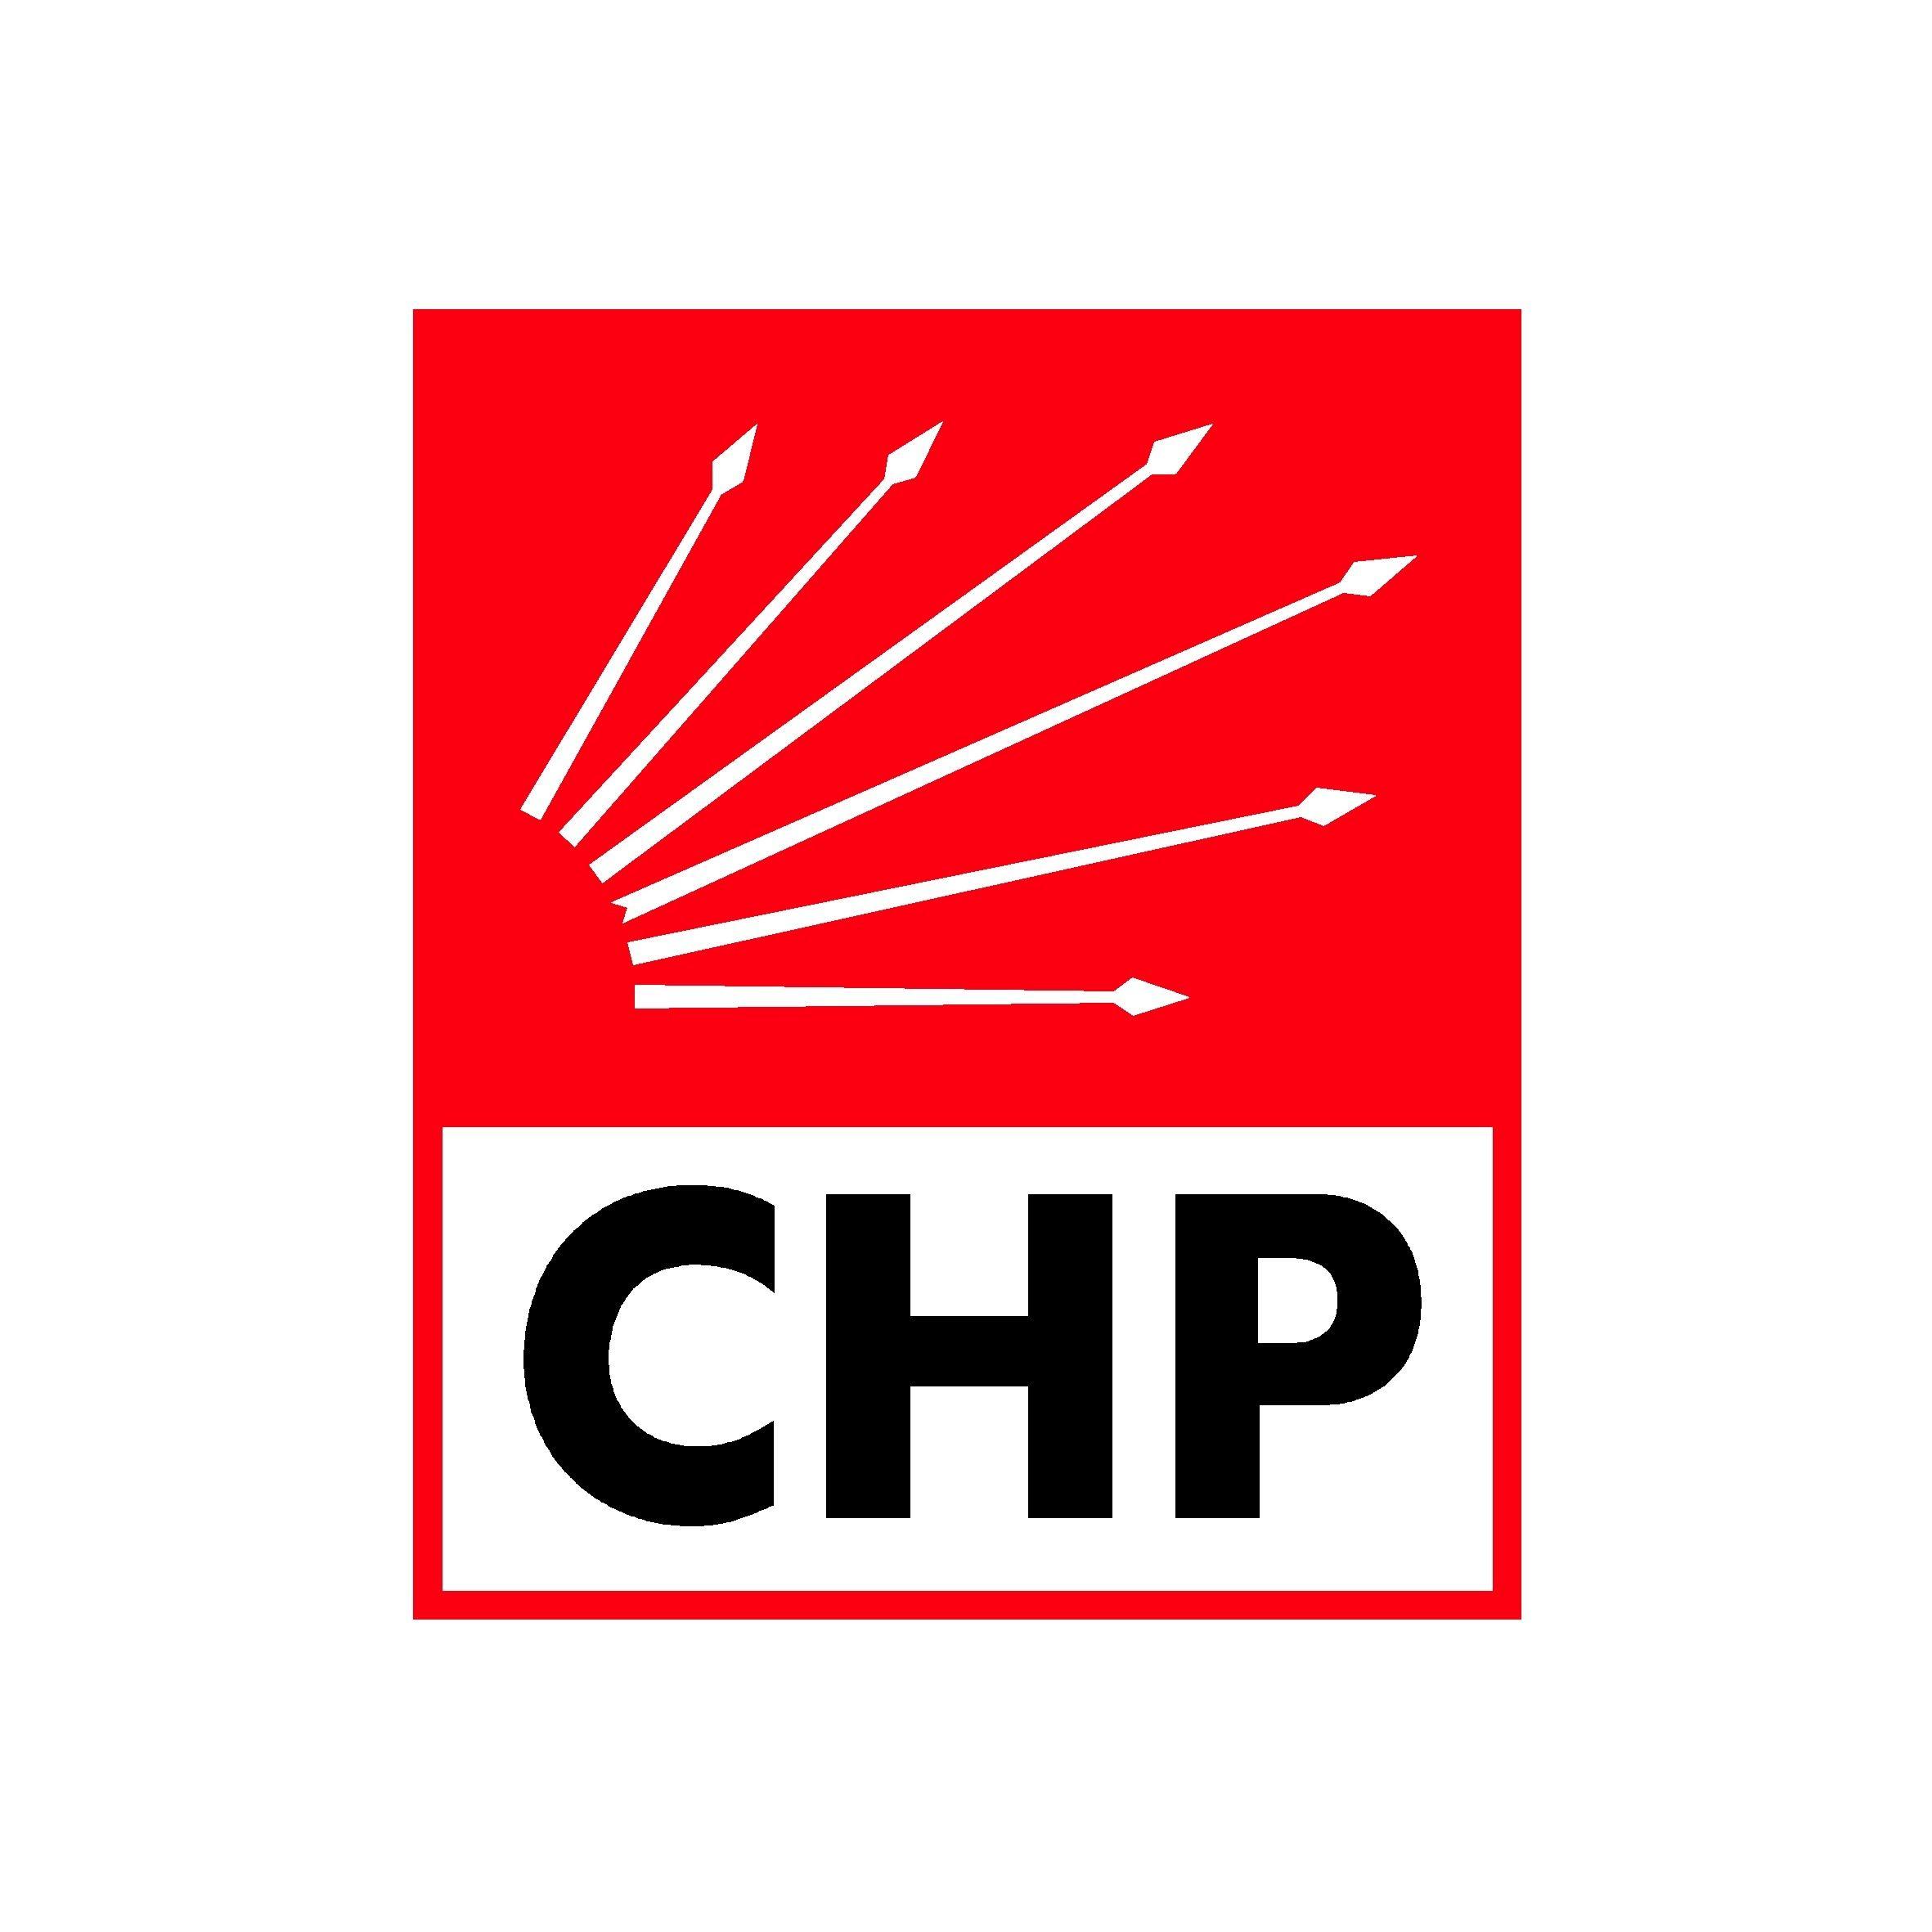 CHP Logo - Chp Logos